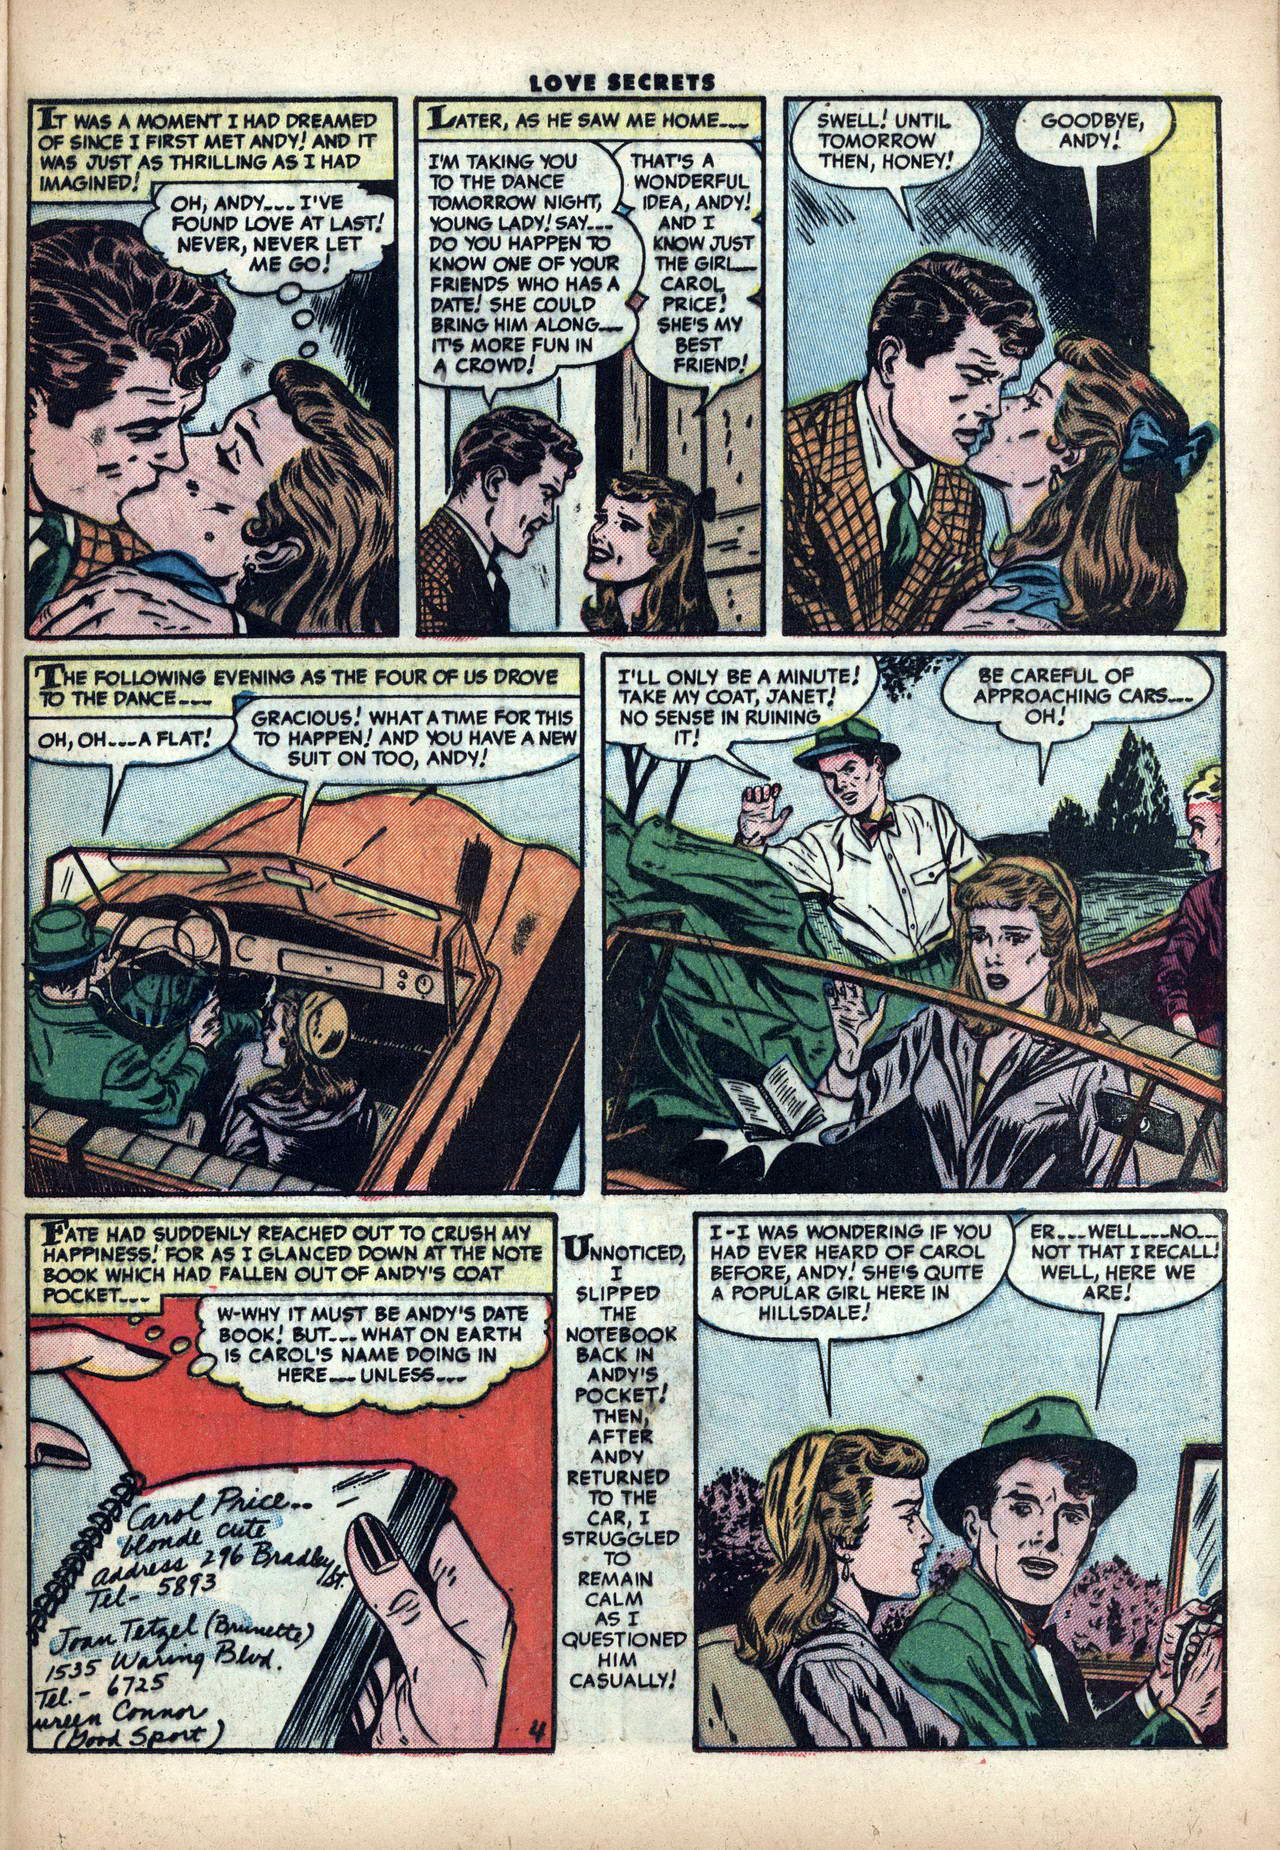 Read online Love Secrets (1953) comic -  Issue #39 - 21